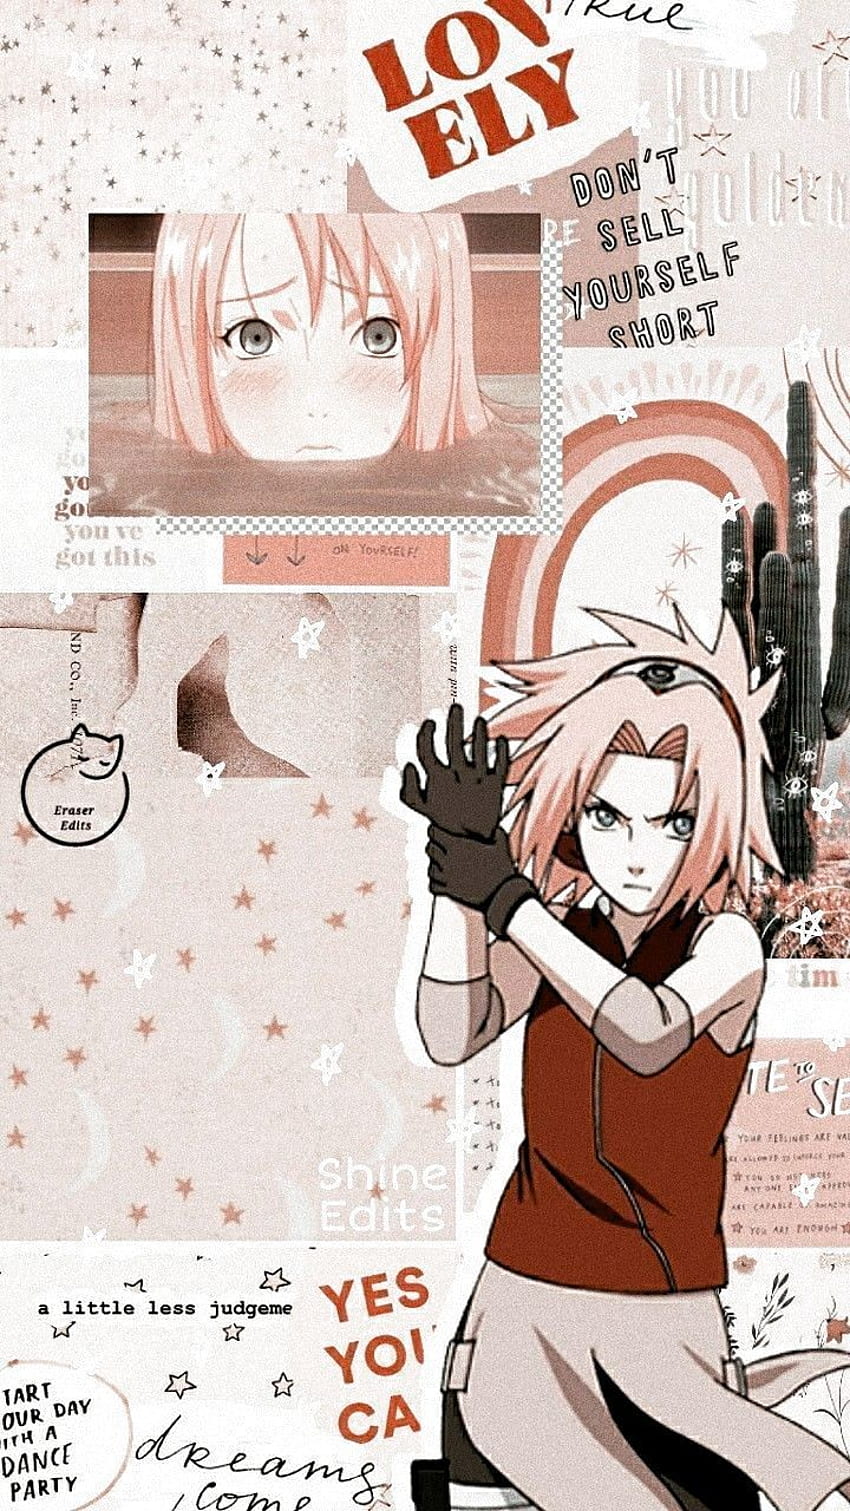 Wallpaper ID 414087  Anime Naruto Phone Wallpaper Sakura Haruno  1080x1920 free download